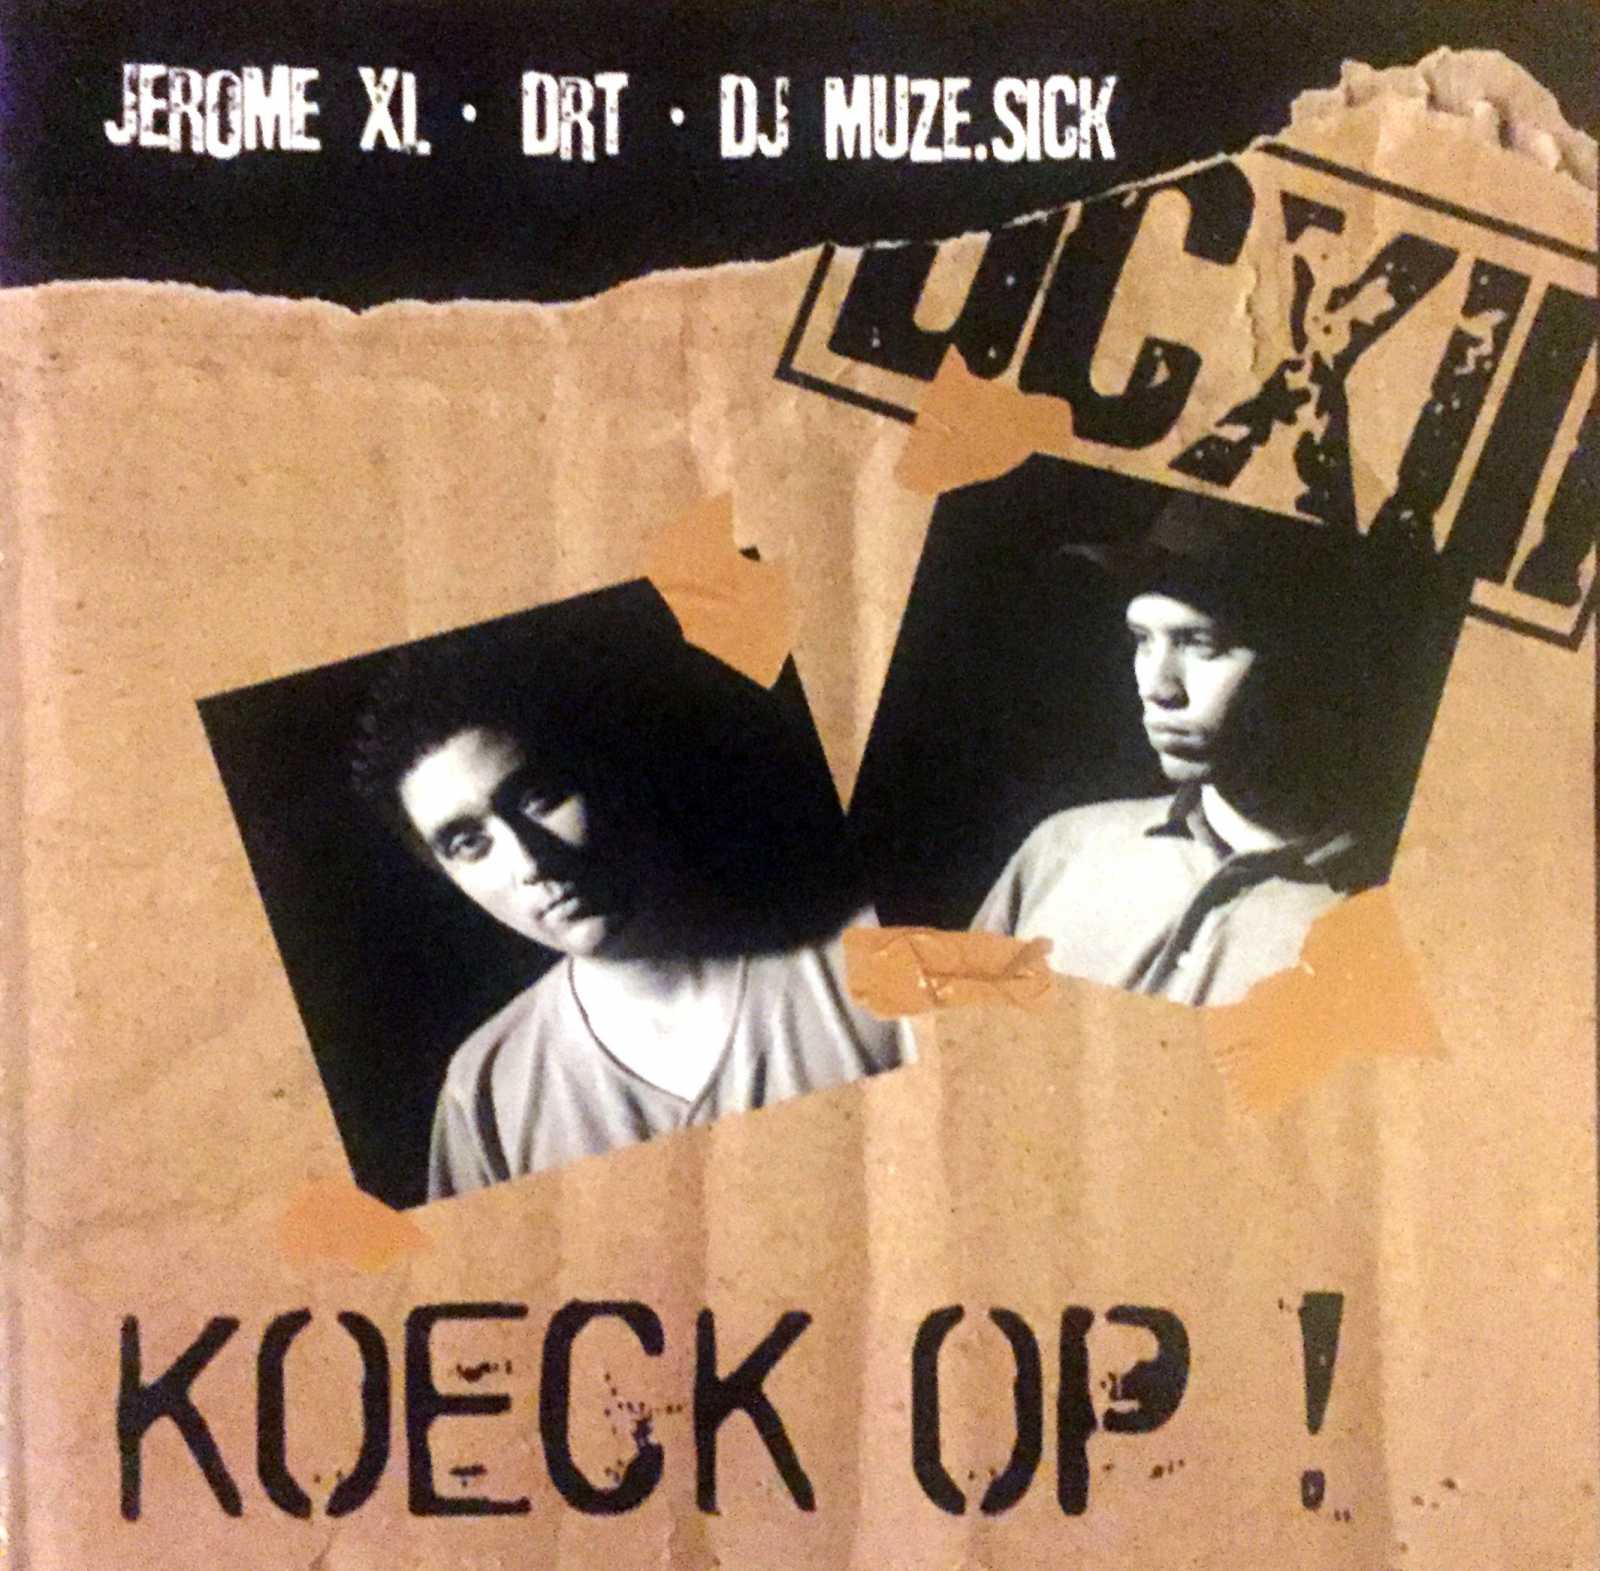 Jerome XL &amp; DRT - Koeck Op (Eig.Beh. / 2005 / Album)